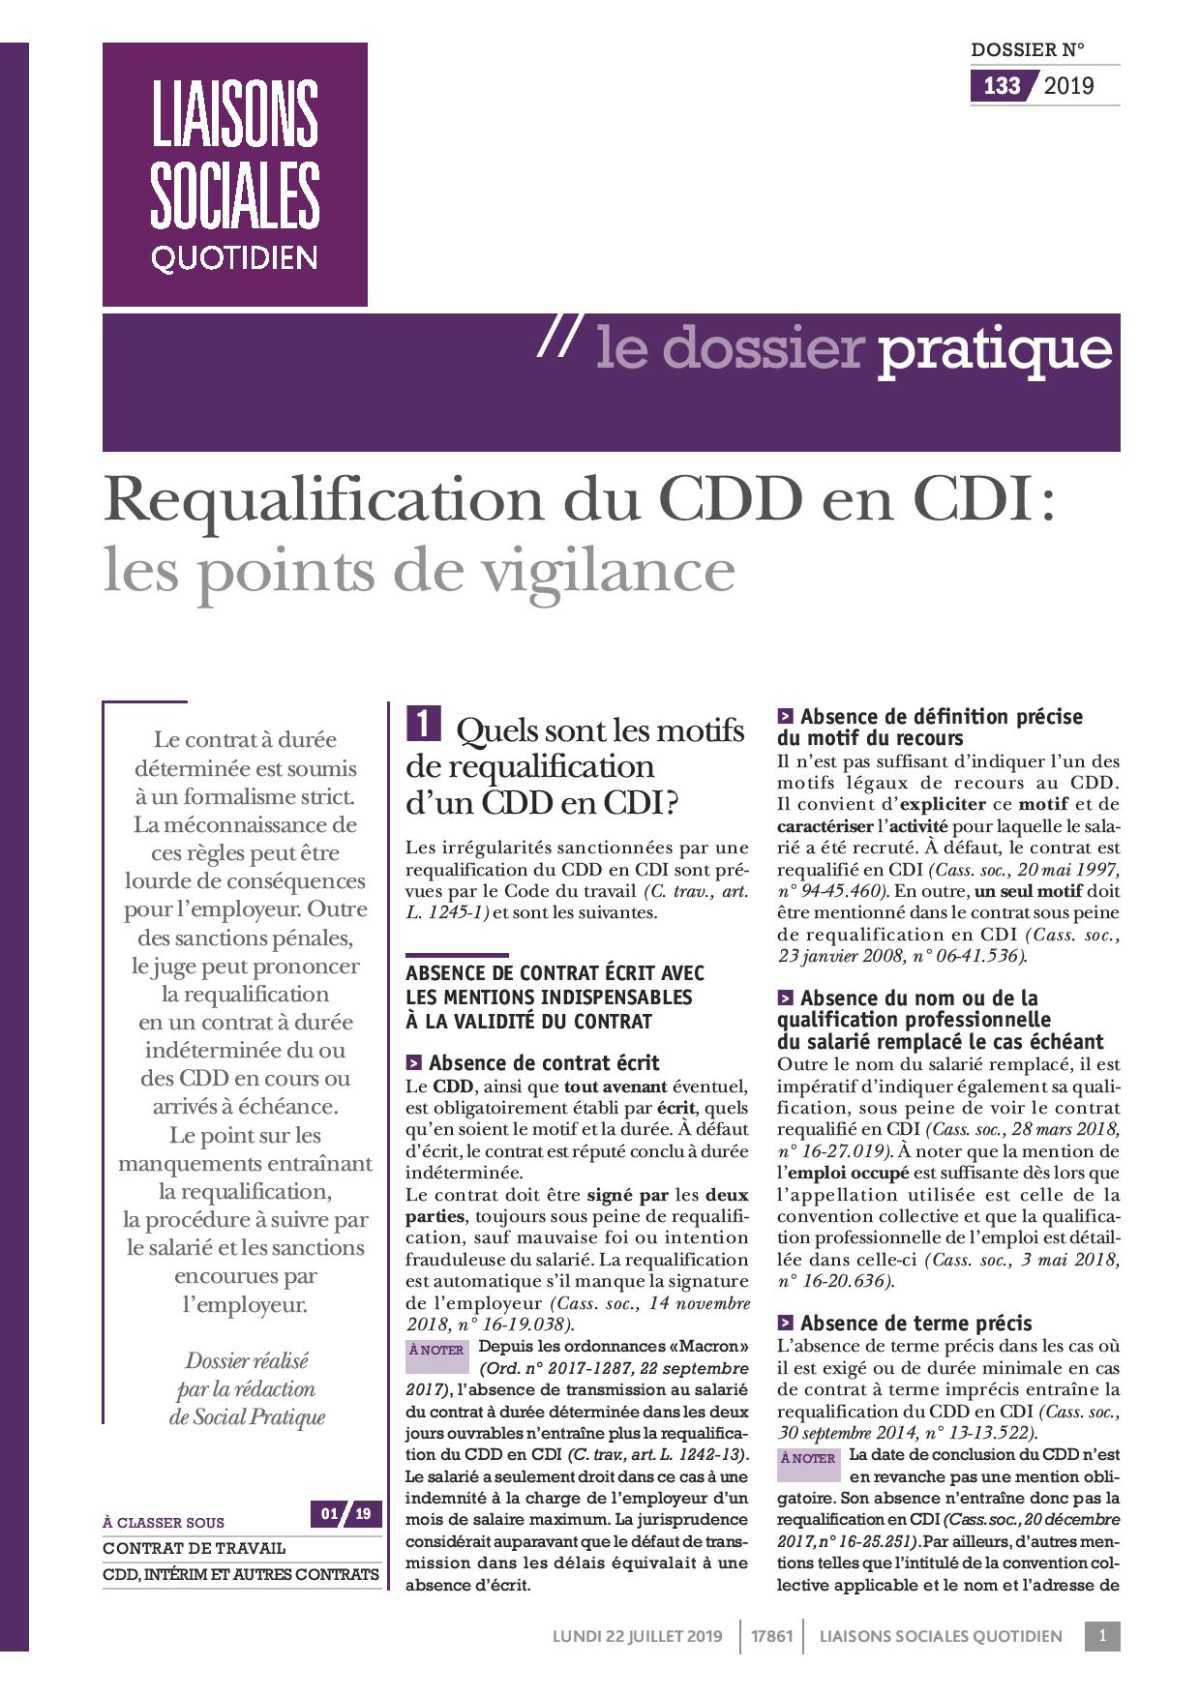 Requalification du CDD en CDI